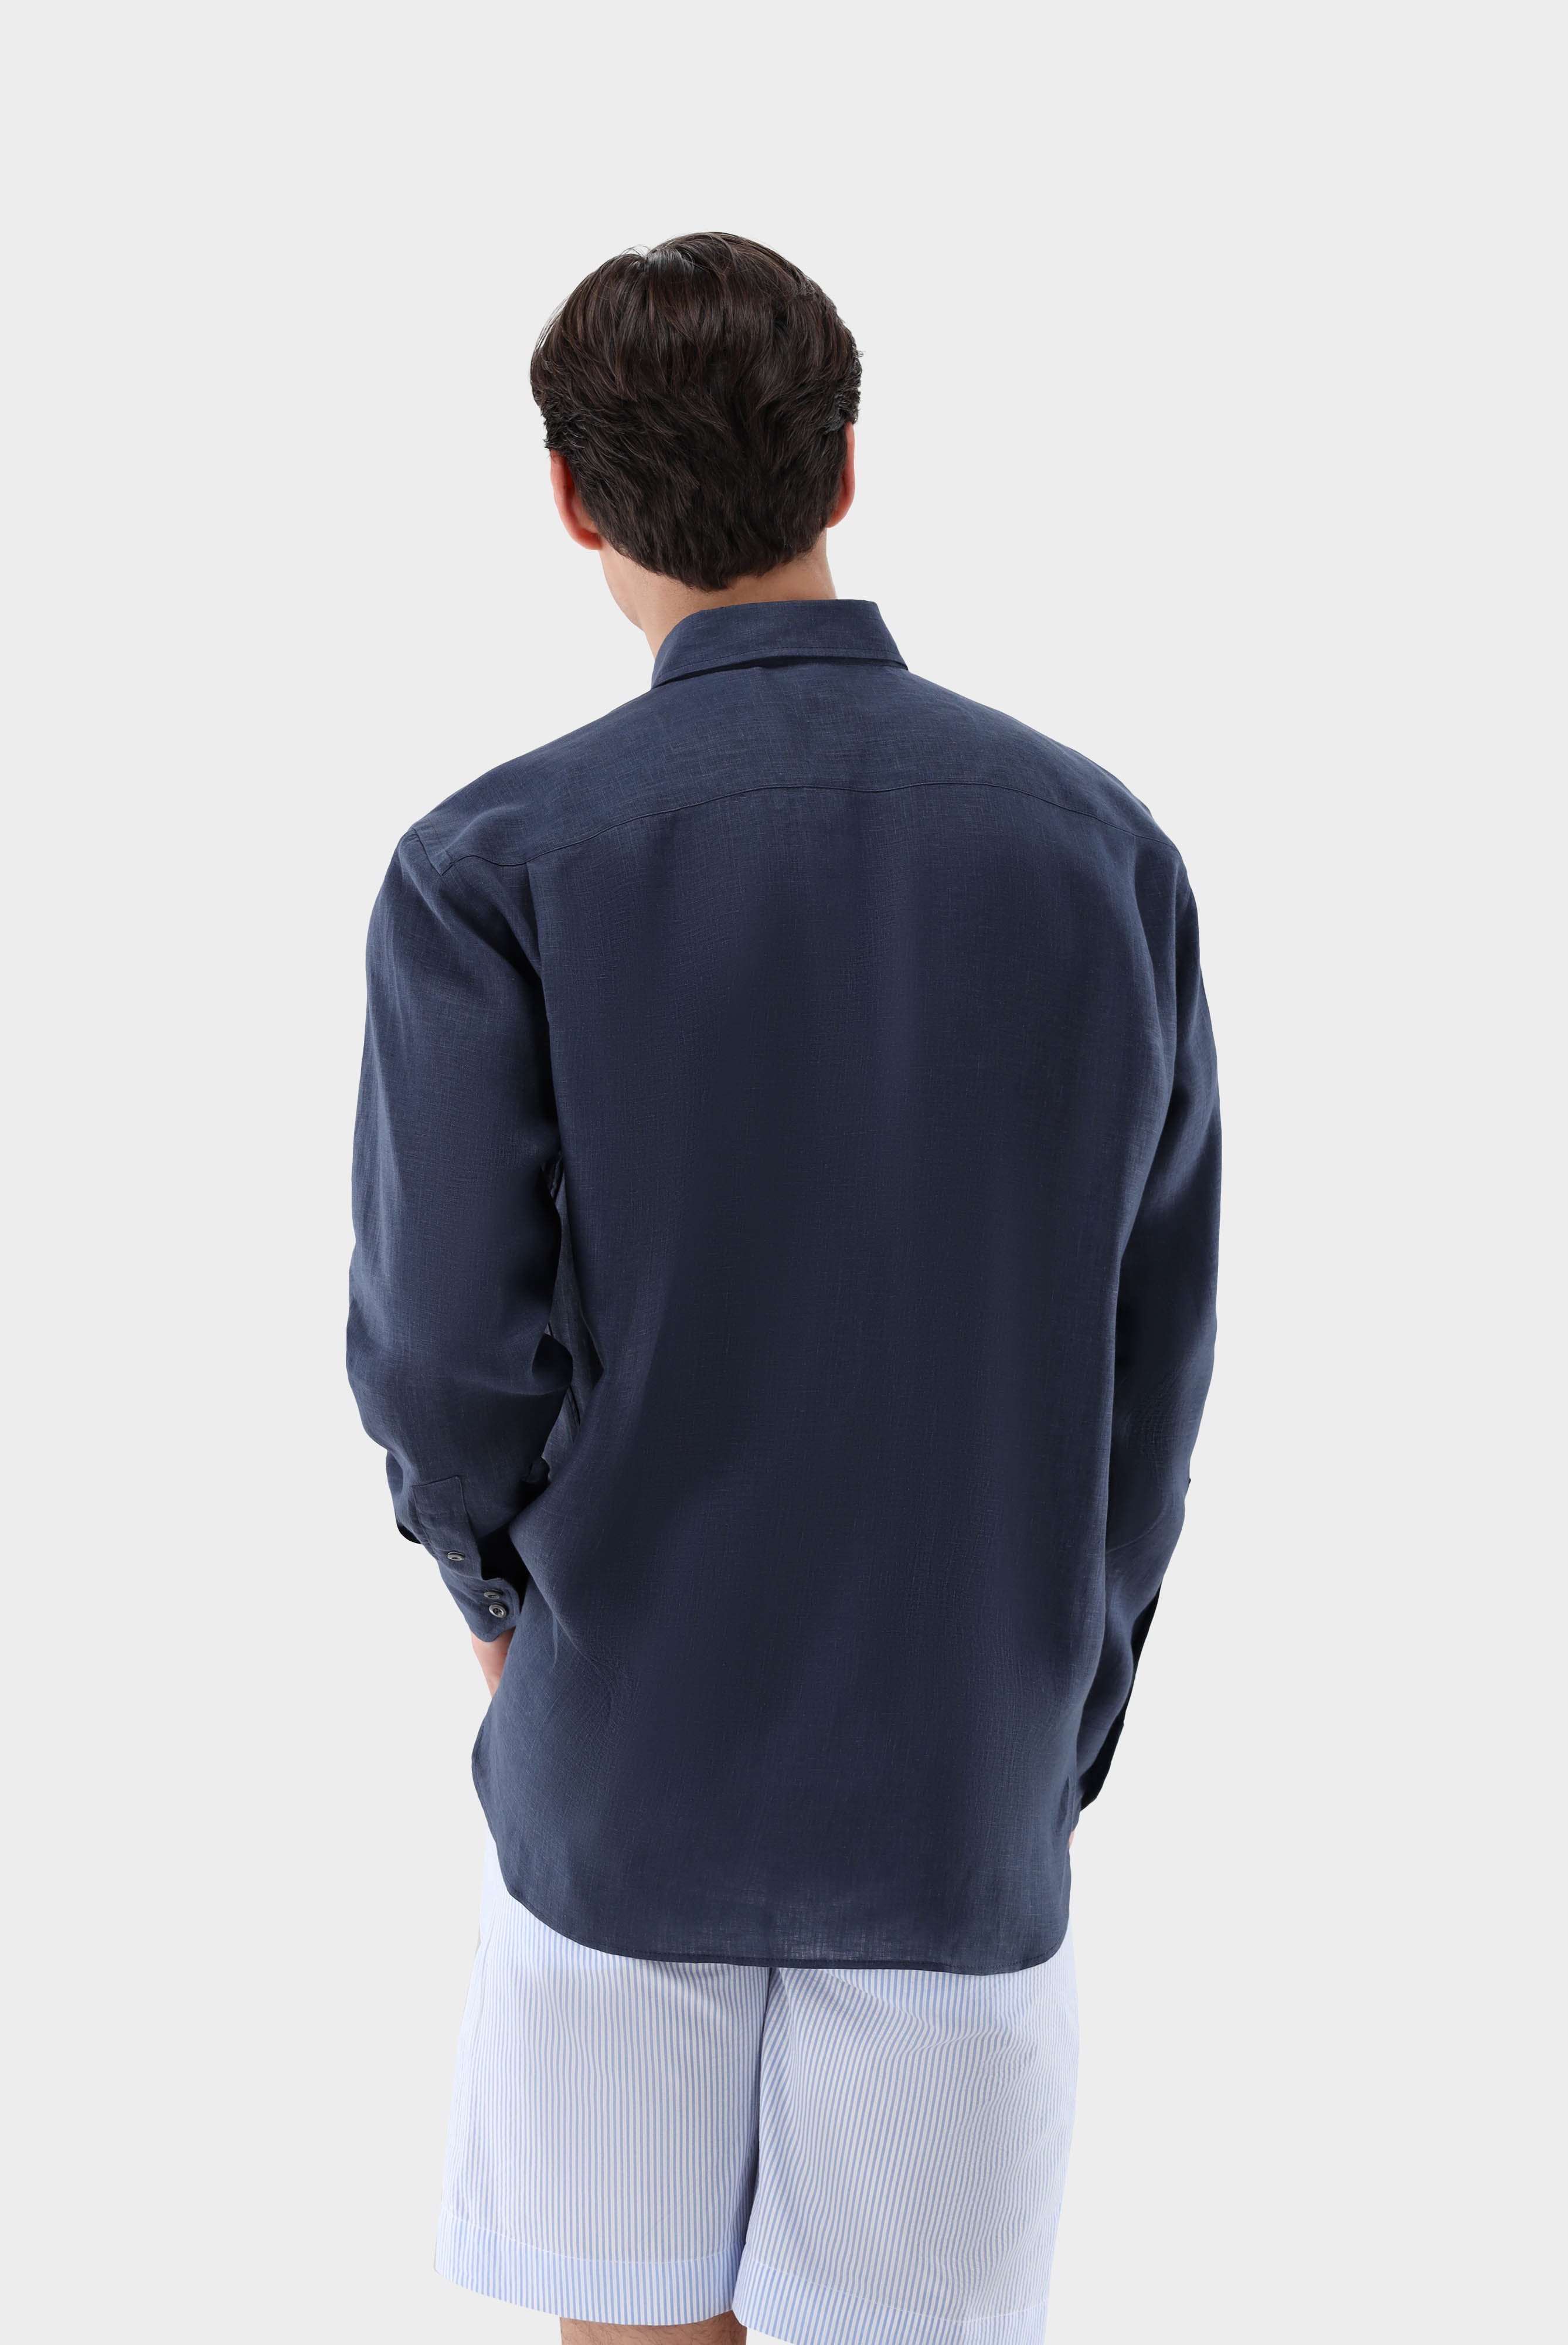 Casual Shirts+Linen Button-Down Collar Shirt+20.2026.9V.150555.785.40